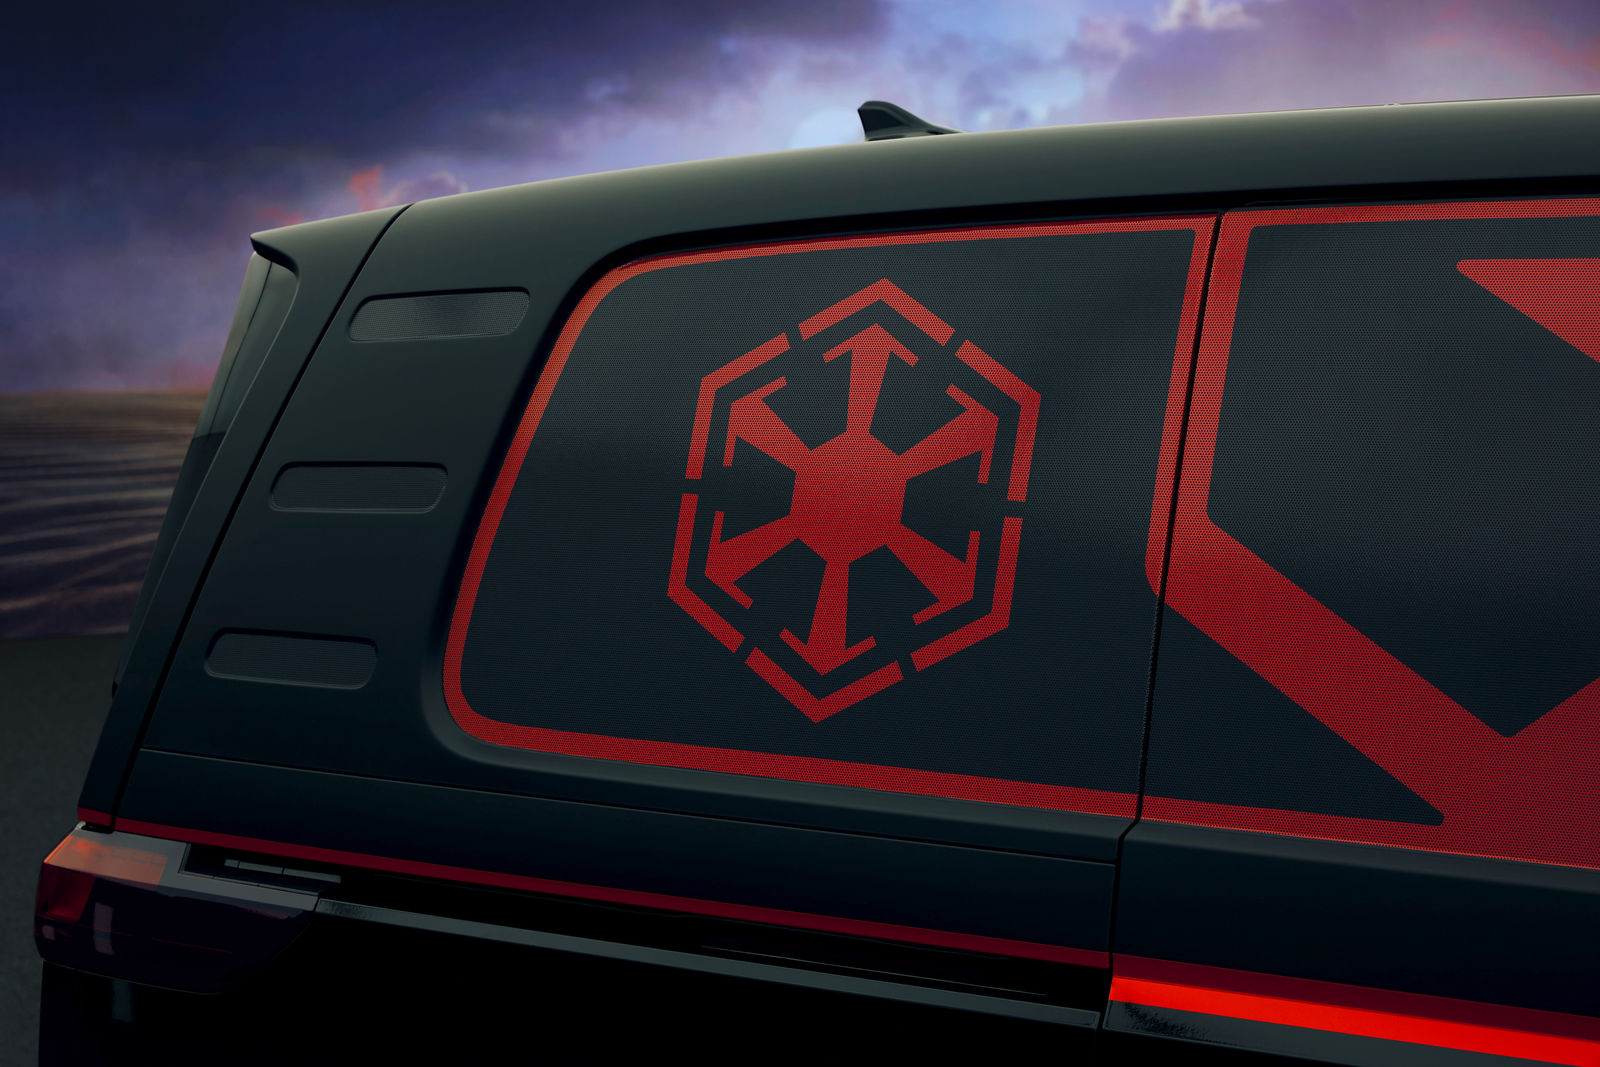 Volkswagen unveils two ‘Obi-Wan Kenobi’ inspired ID. Buzz vehicles at Star Wars Celebration